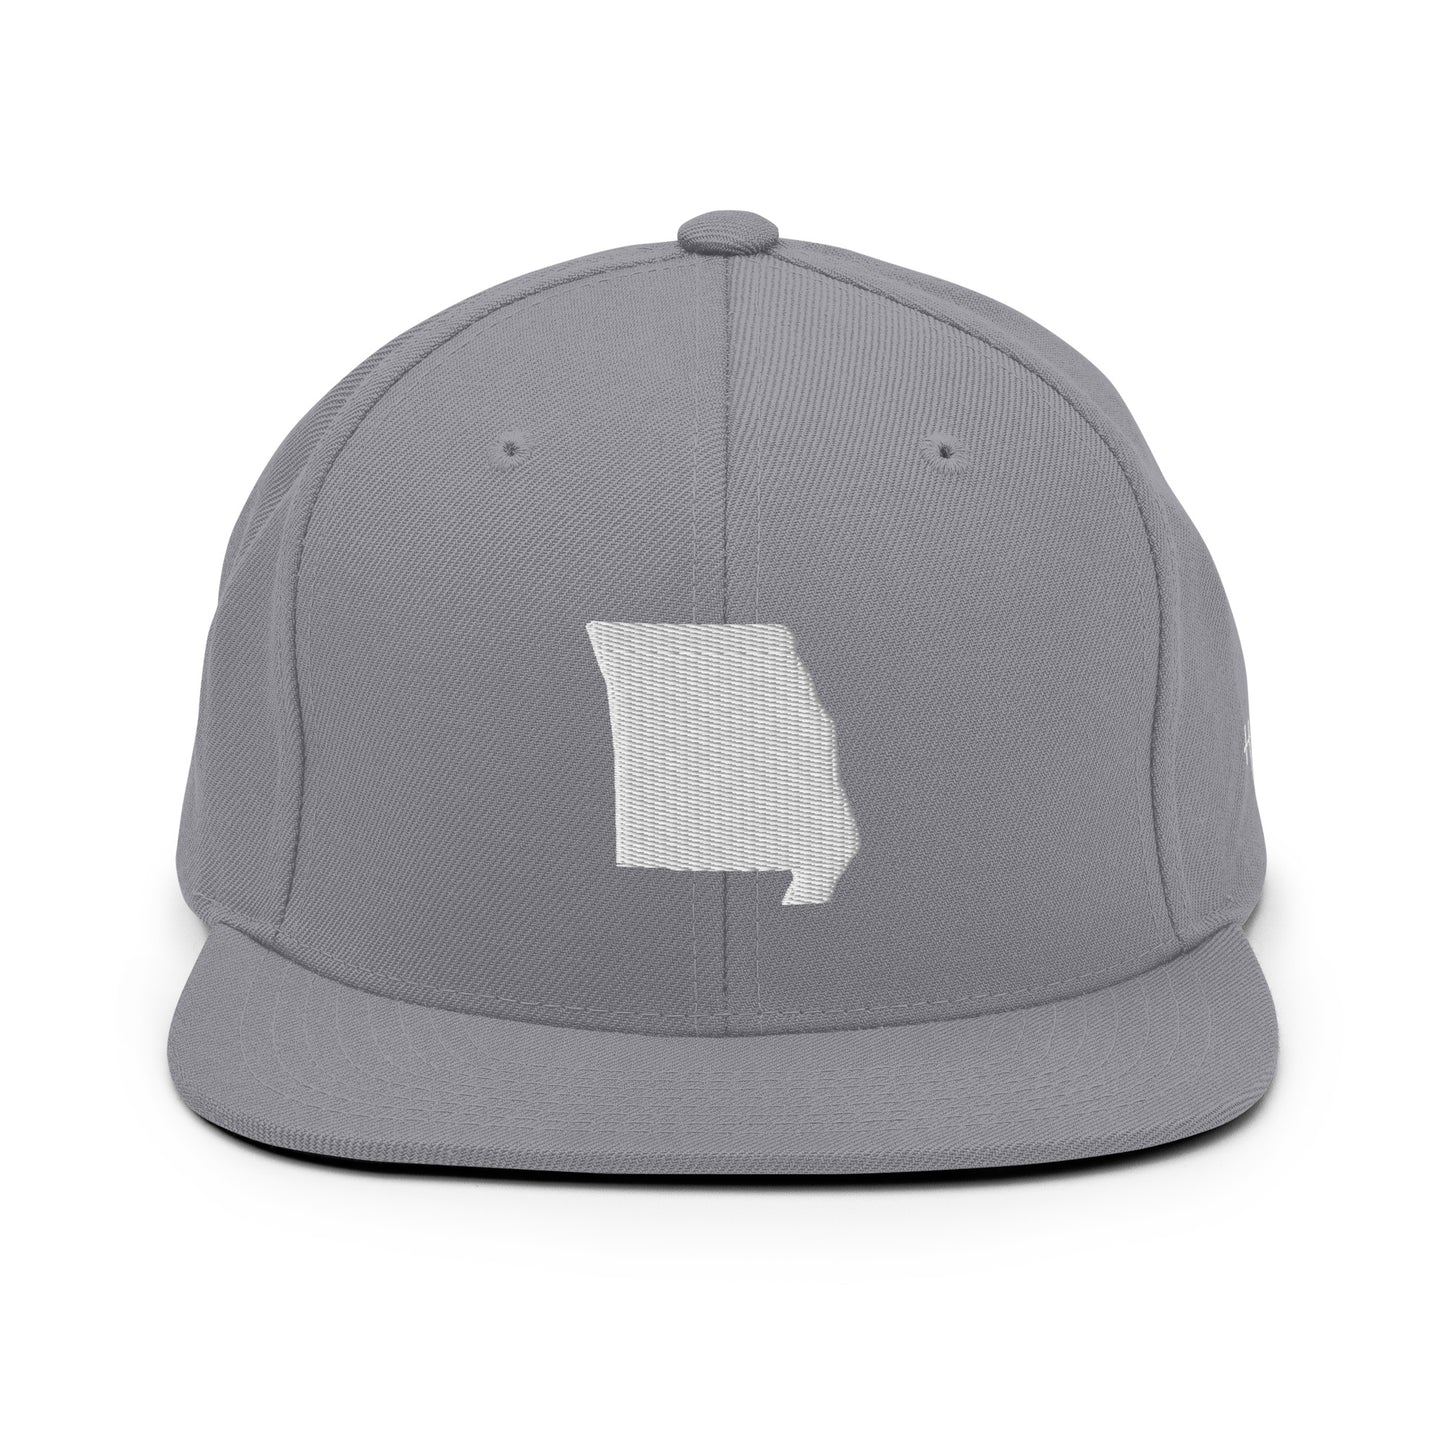 Missouri State Silhouette 6 Panel Snapback Hat